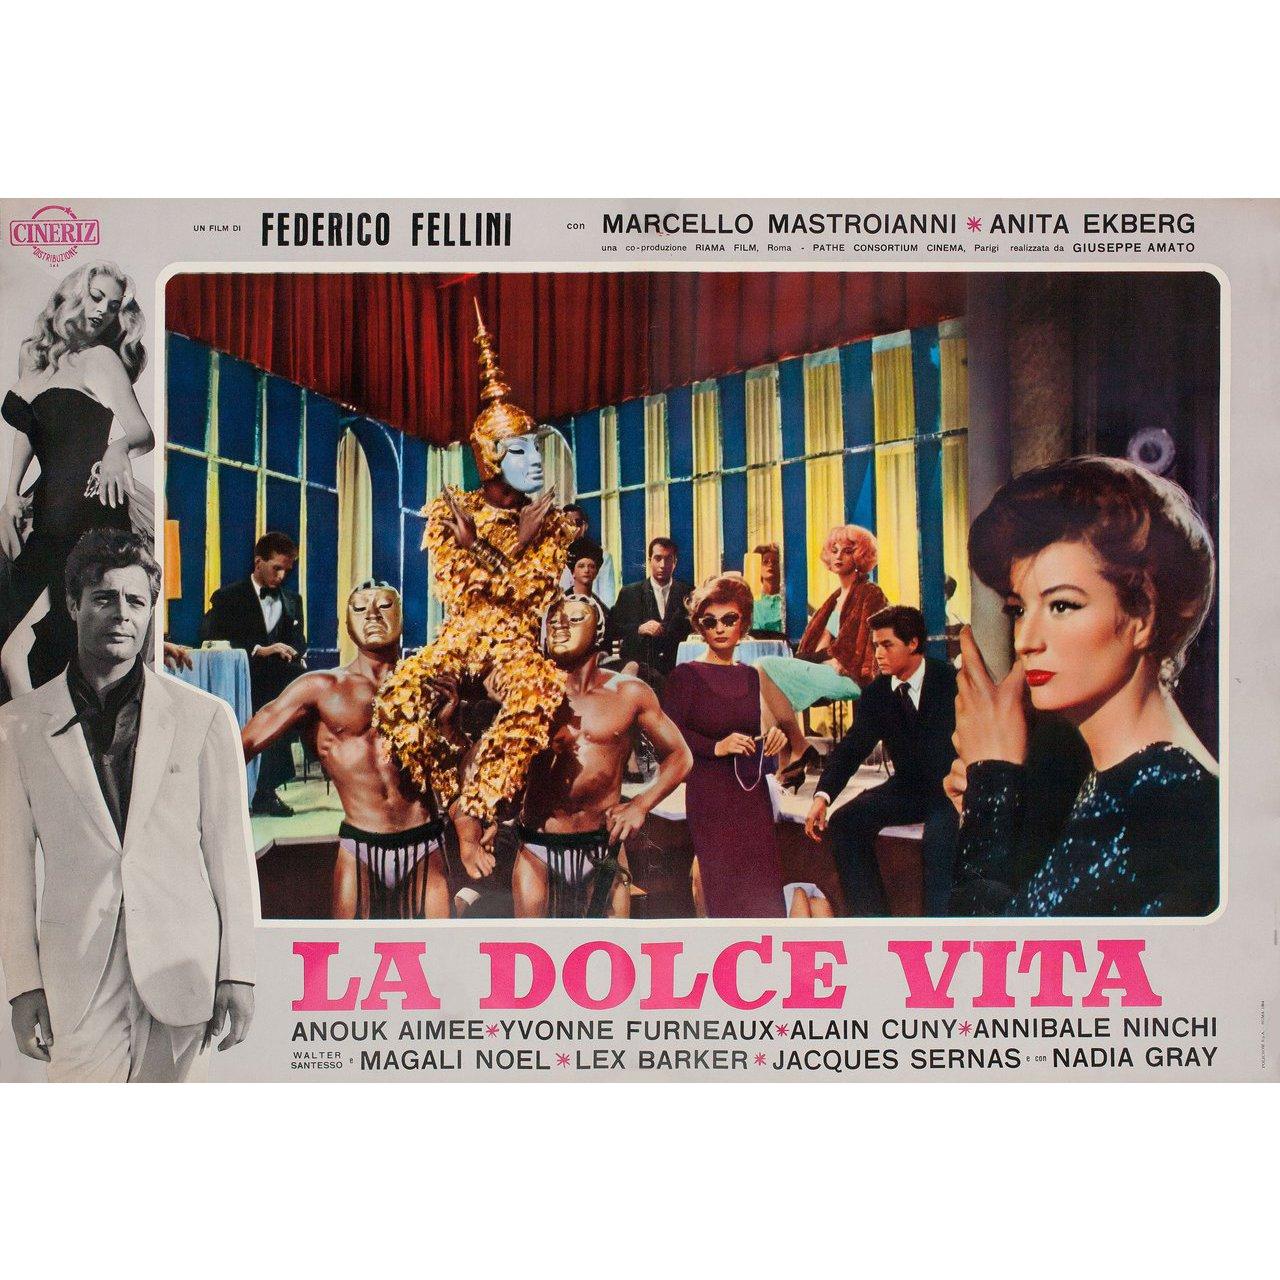 Original 1964 re-release Italian fotobusta poster for the 1960 film La Dolce Vita directed by Federico Fellini with Marcello Mastroianni / Anita Ekberg / Anouk Aimee / Yvonne Furneaux. Very Good-Fine condition, folded. Many original posters were